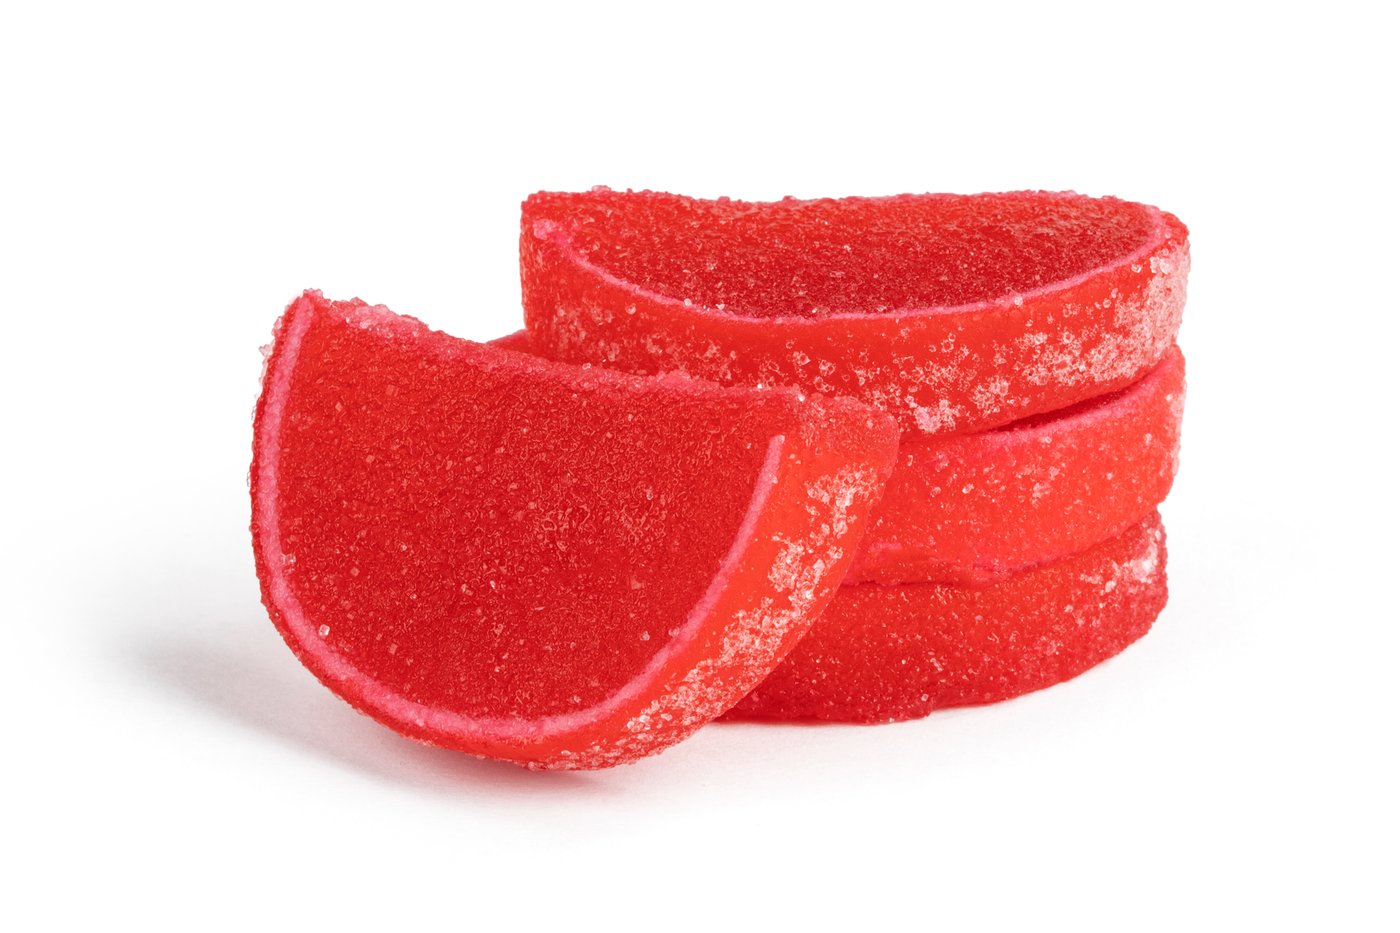 Red Raspberry Fruit Slices photo